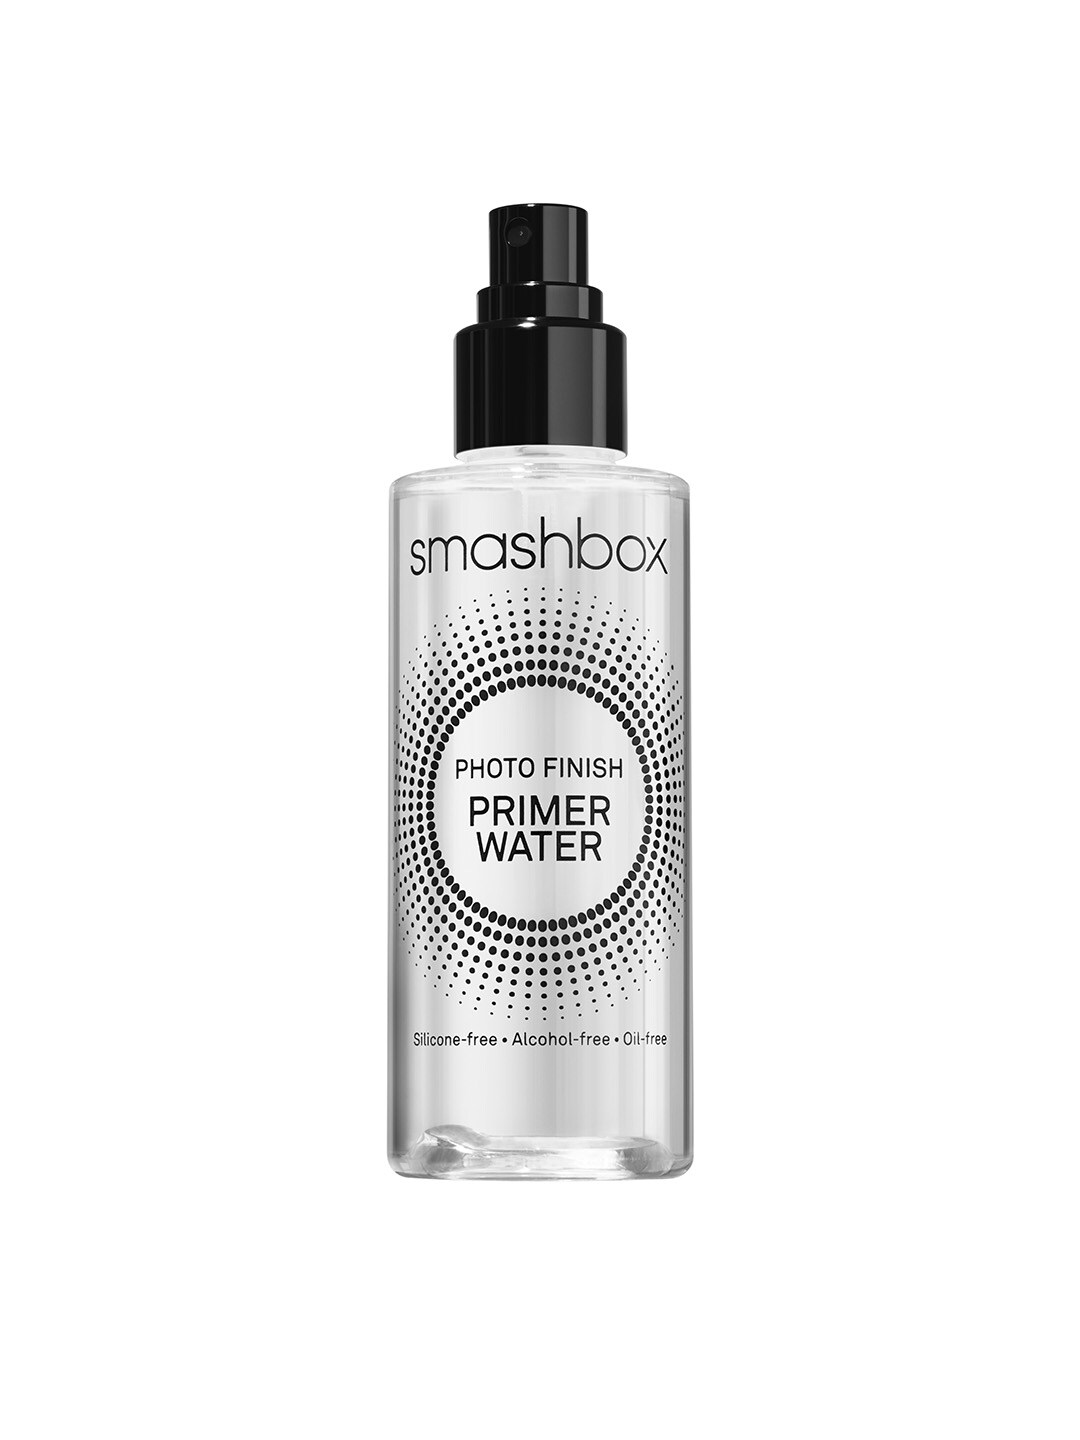 Smashbox Photo Finish Primer Water 116 ml Price in India